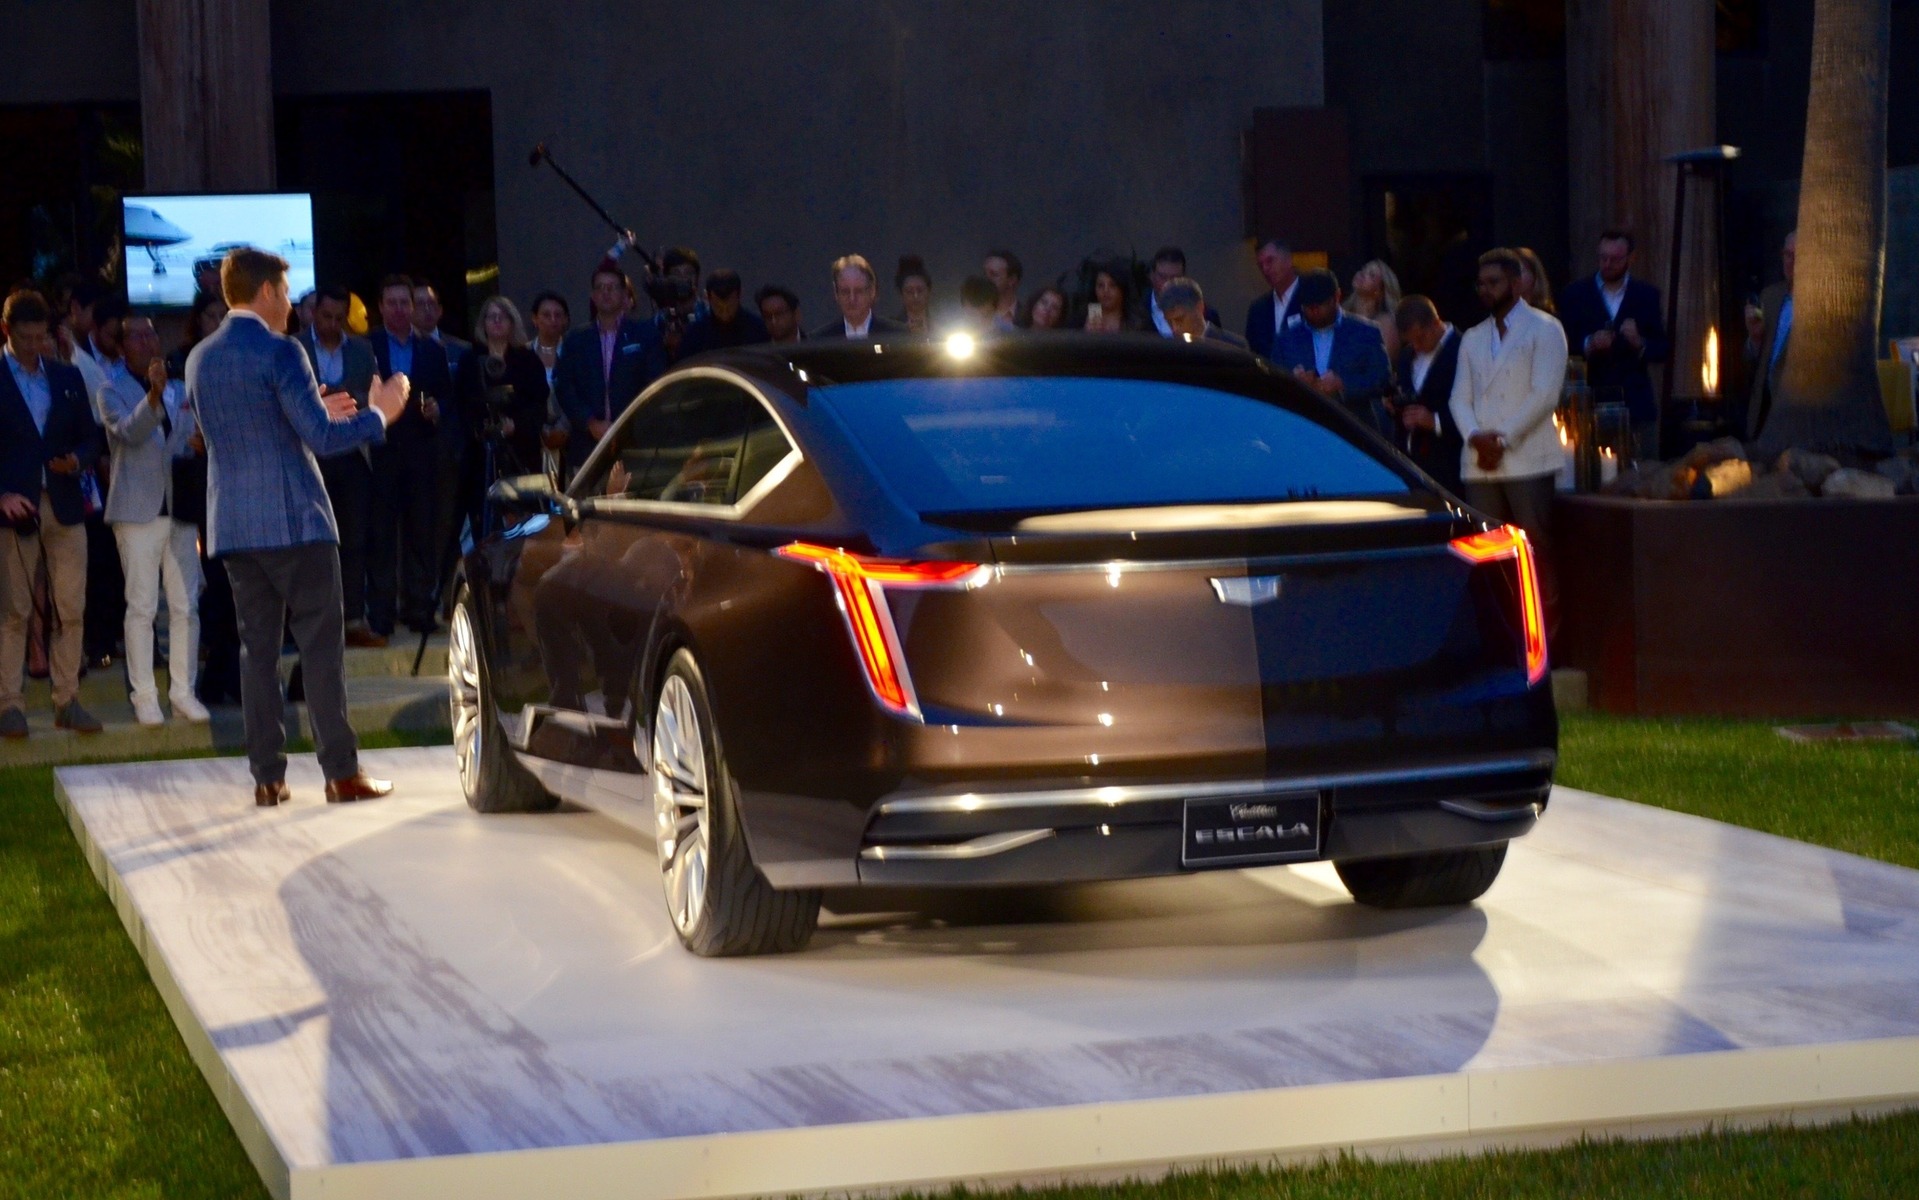 Cadillac Escala - The brand's new design language